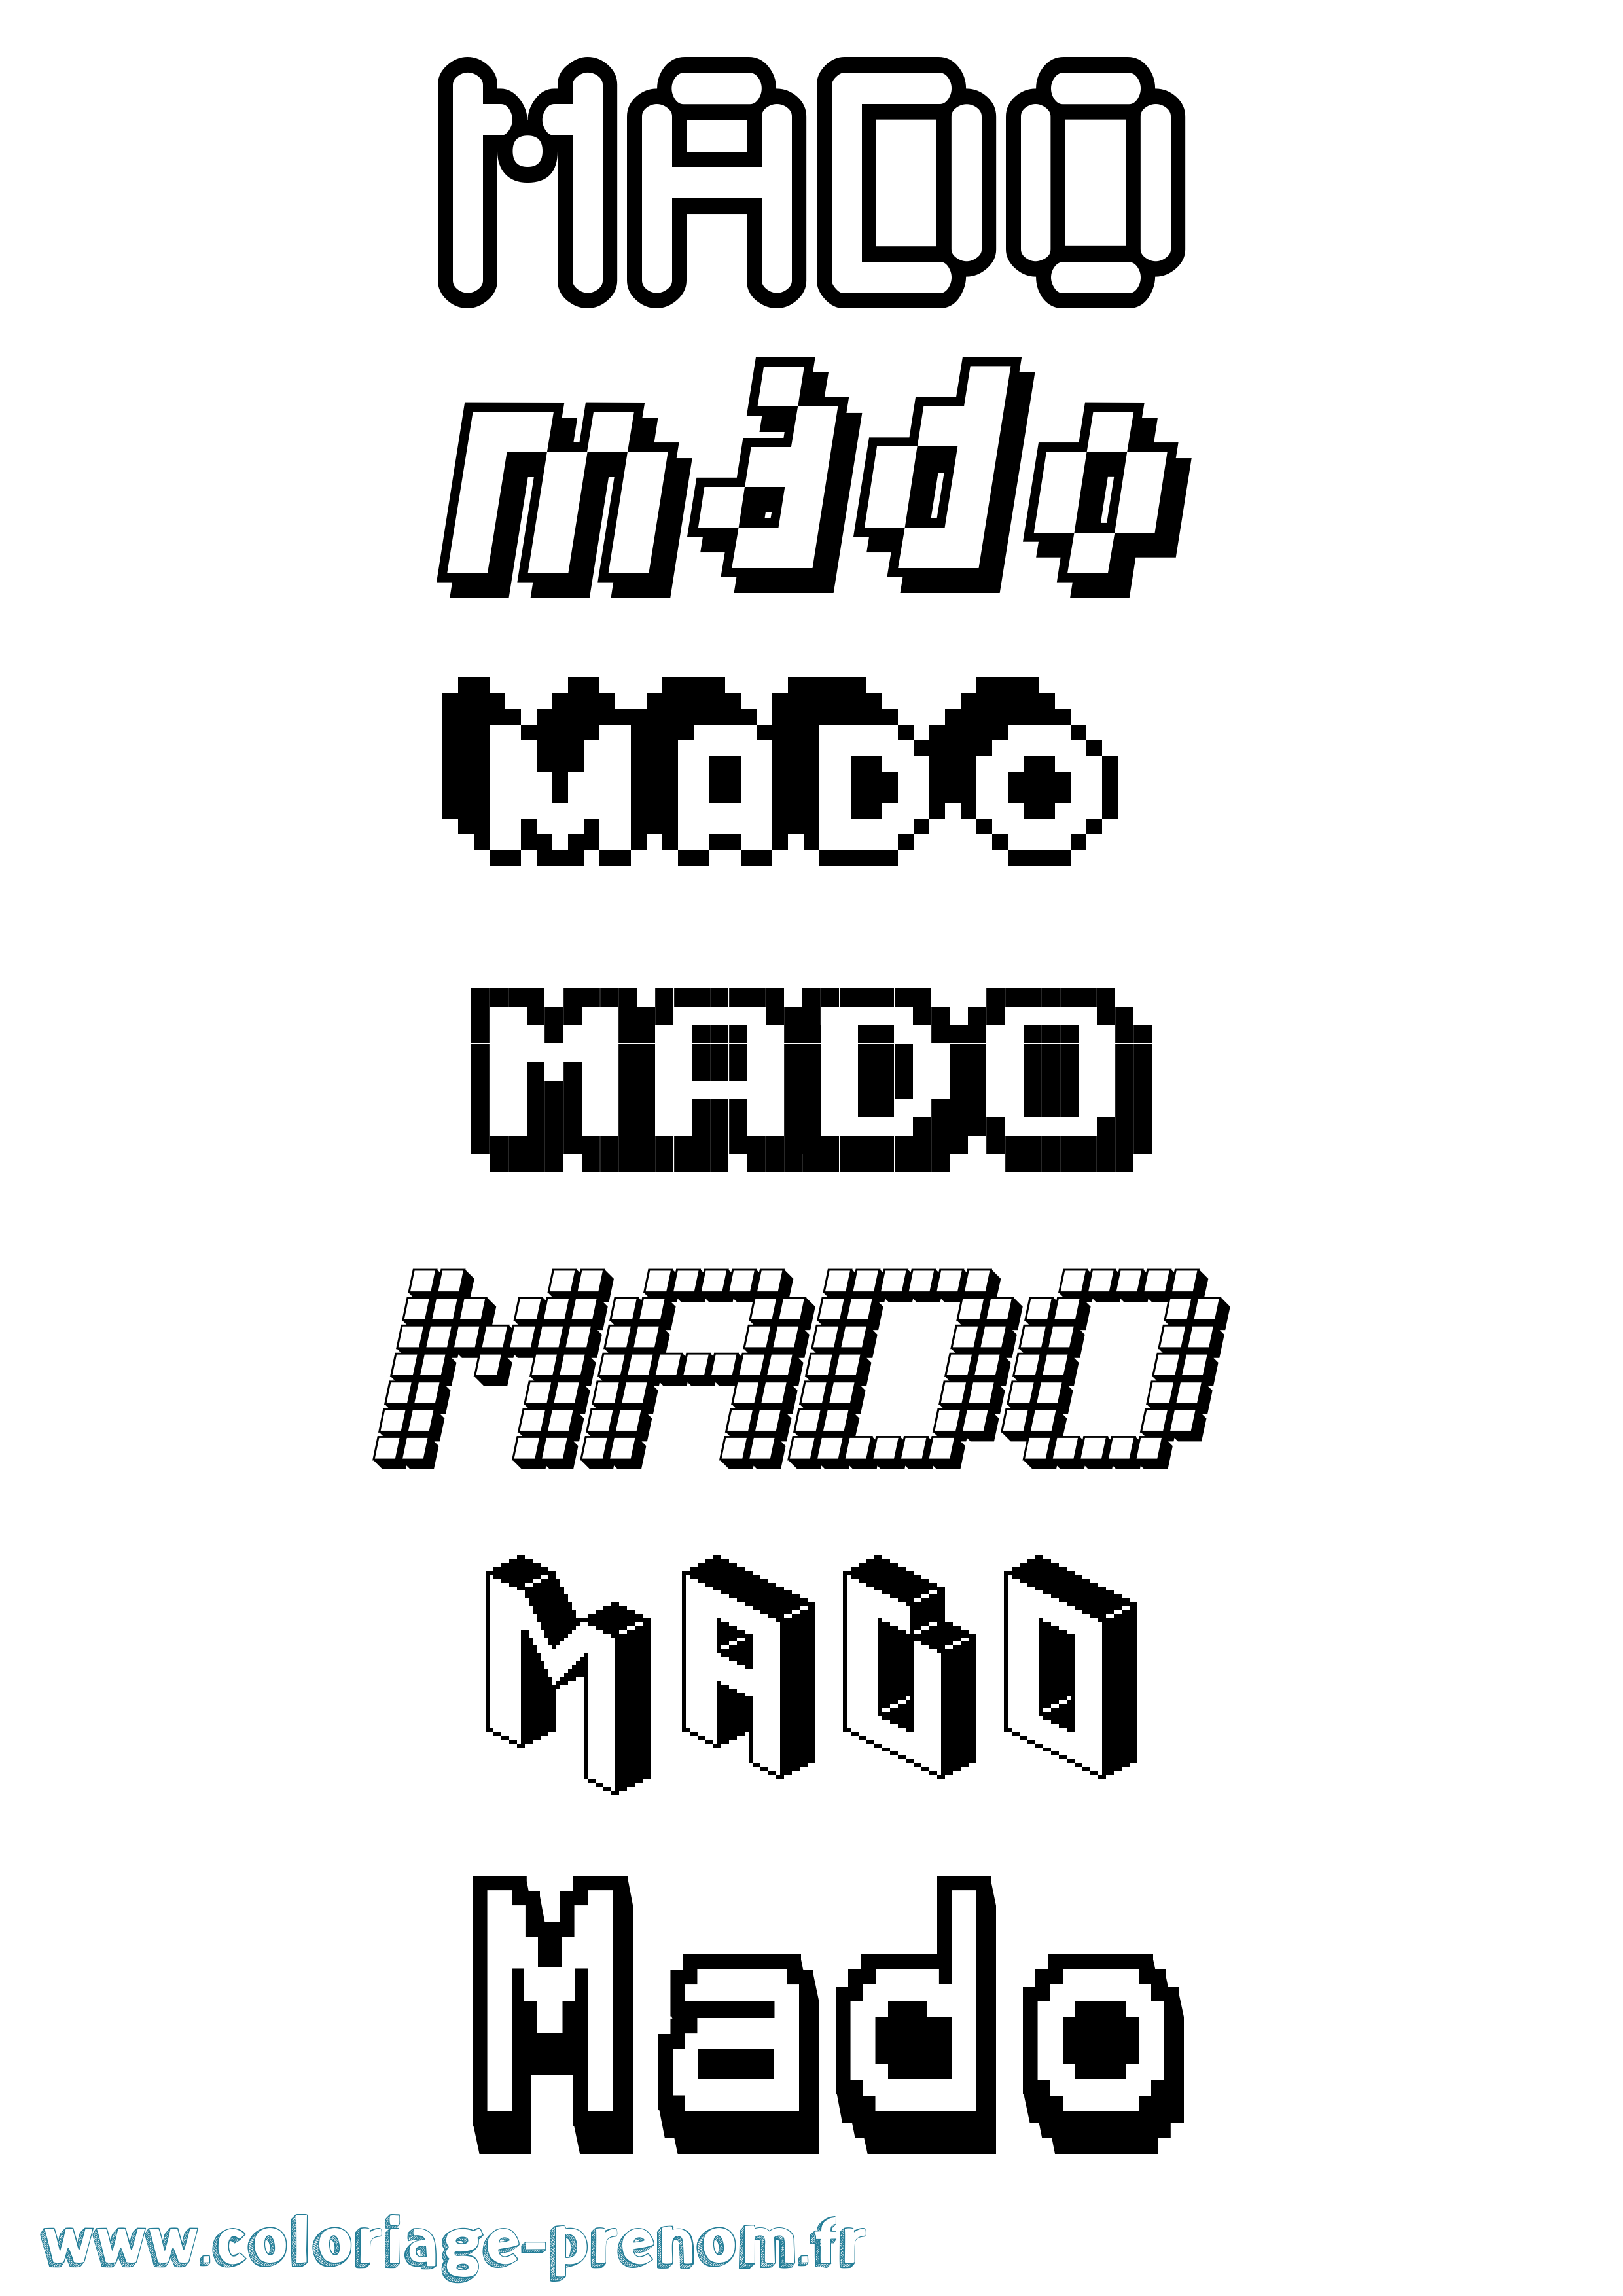 Coloriage prénom Mado Pixel